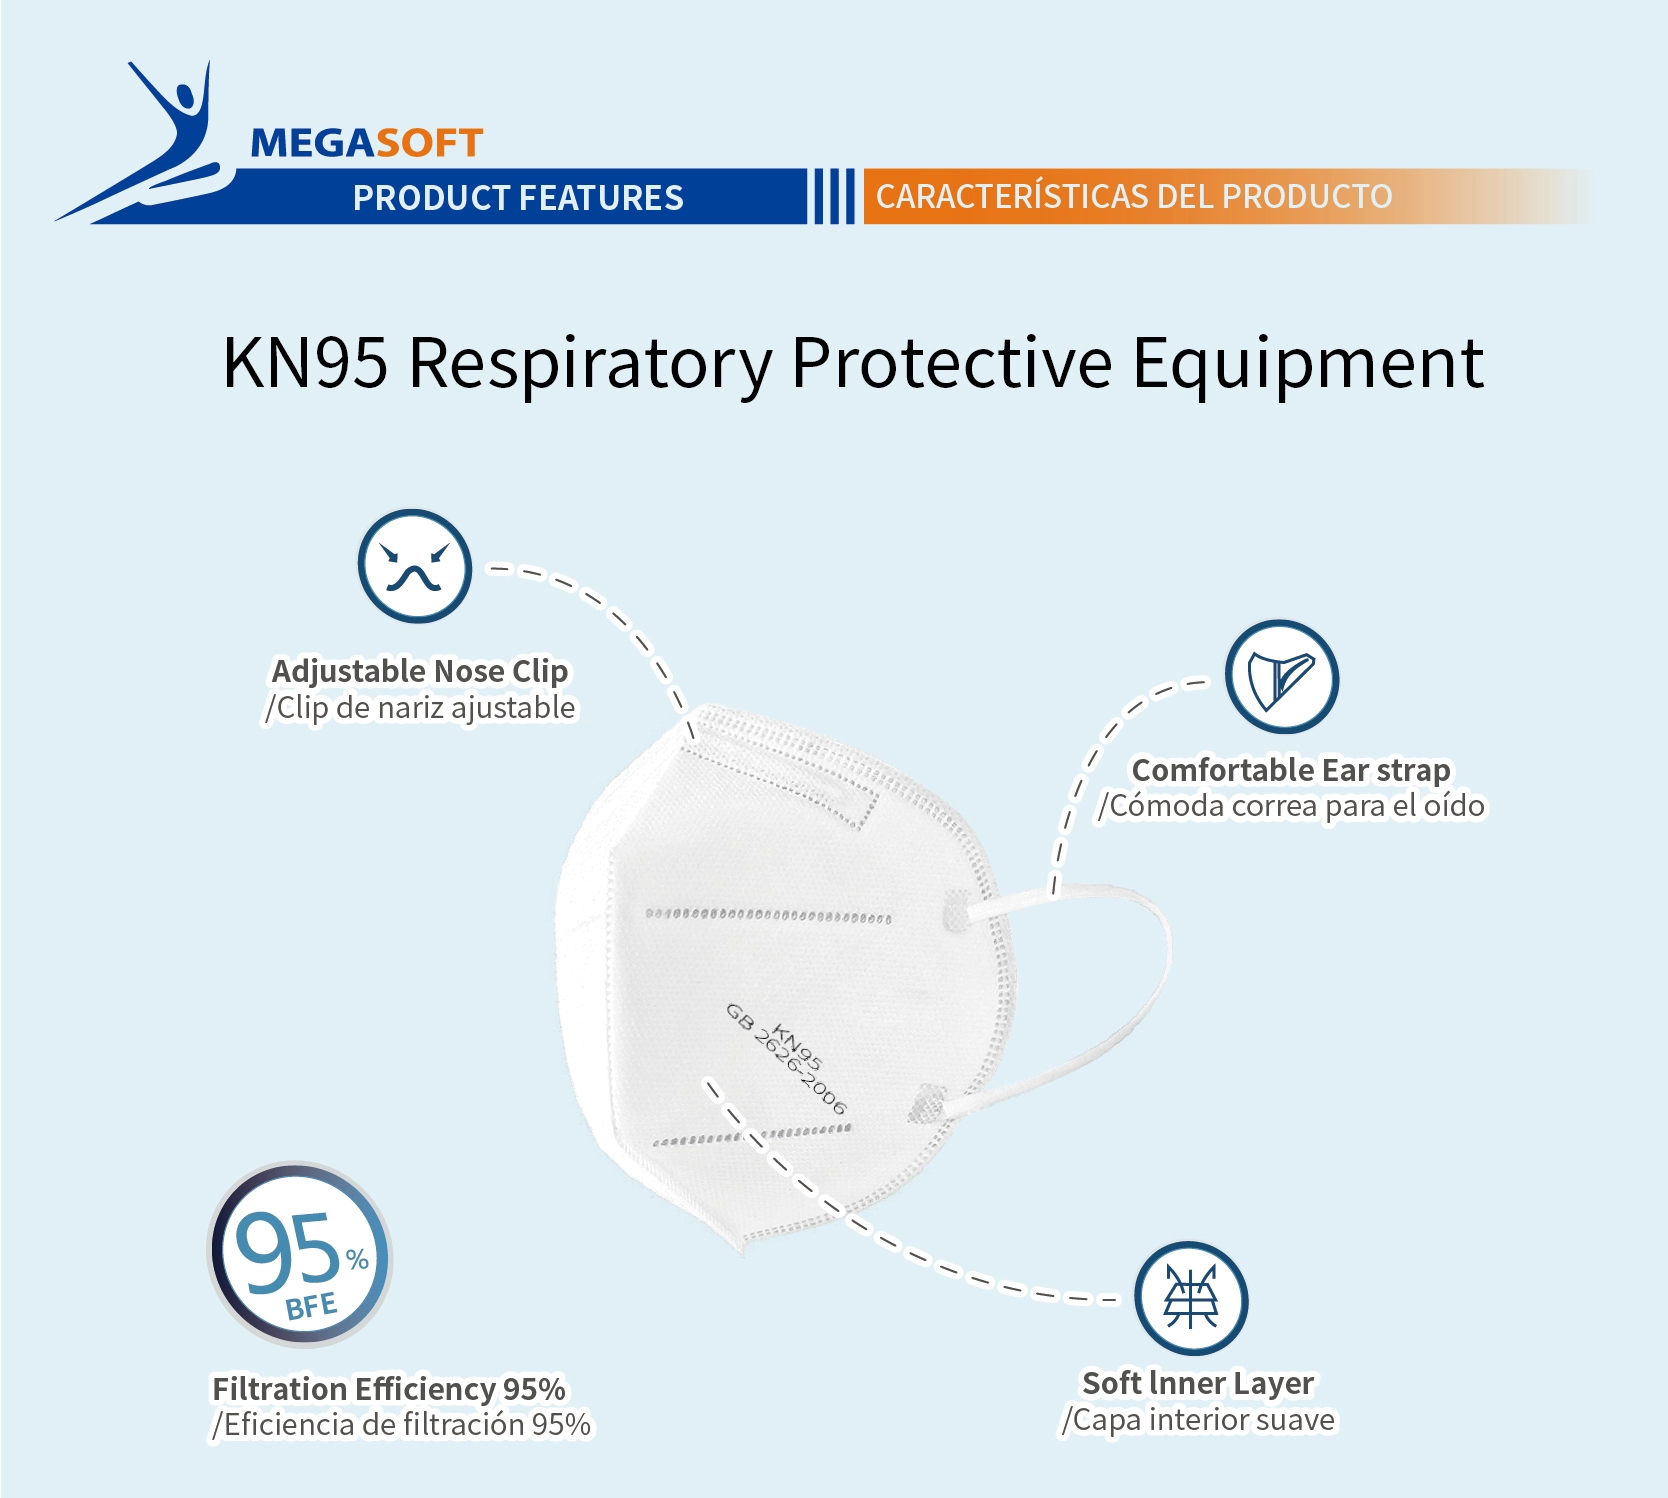 KN95 Respiratory Protective Equipment